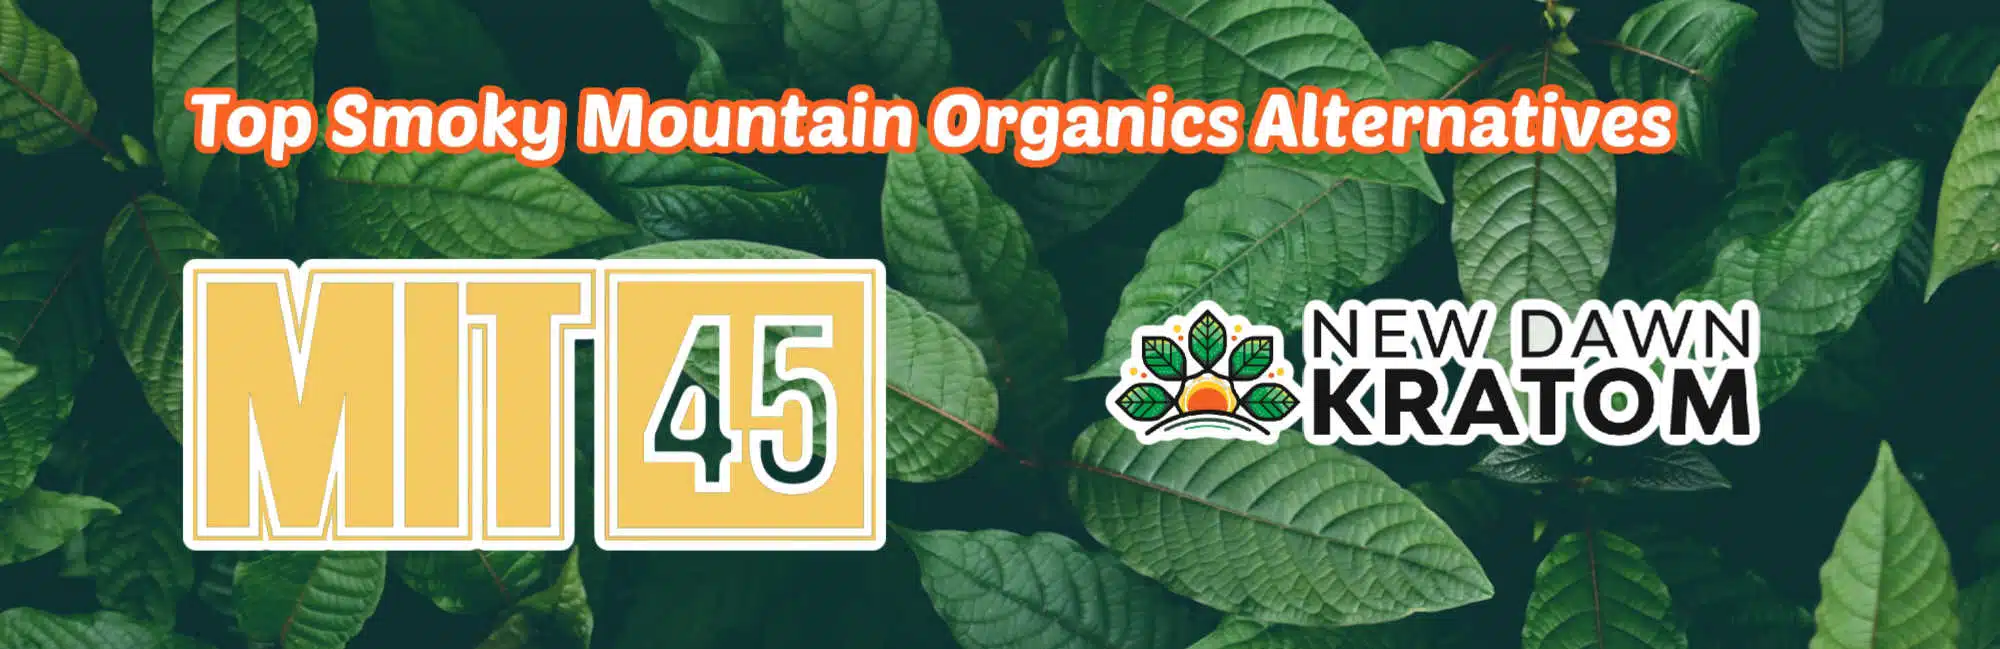 image of smoky mountain organics kratom alternatives